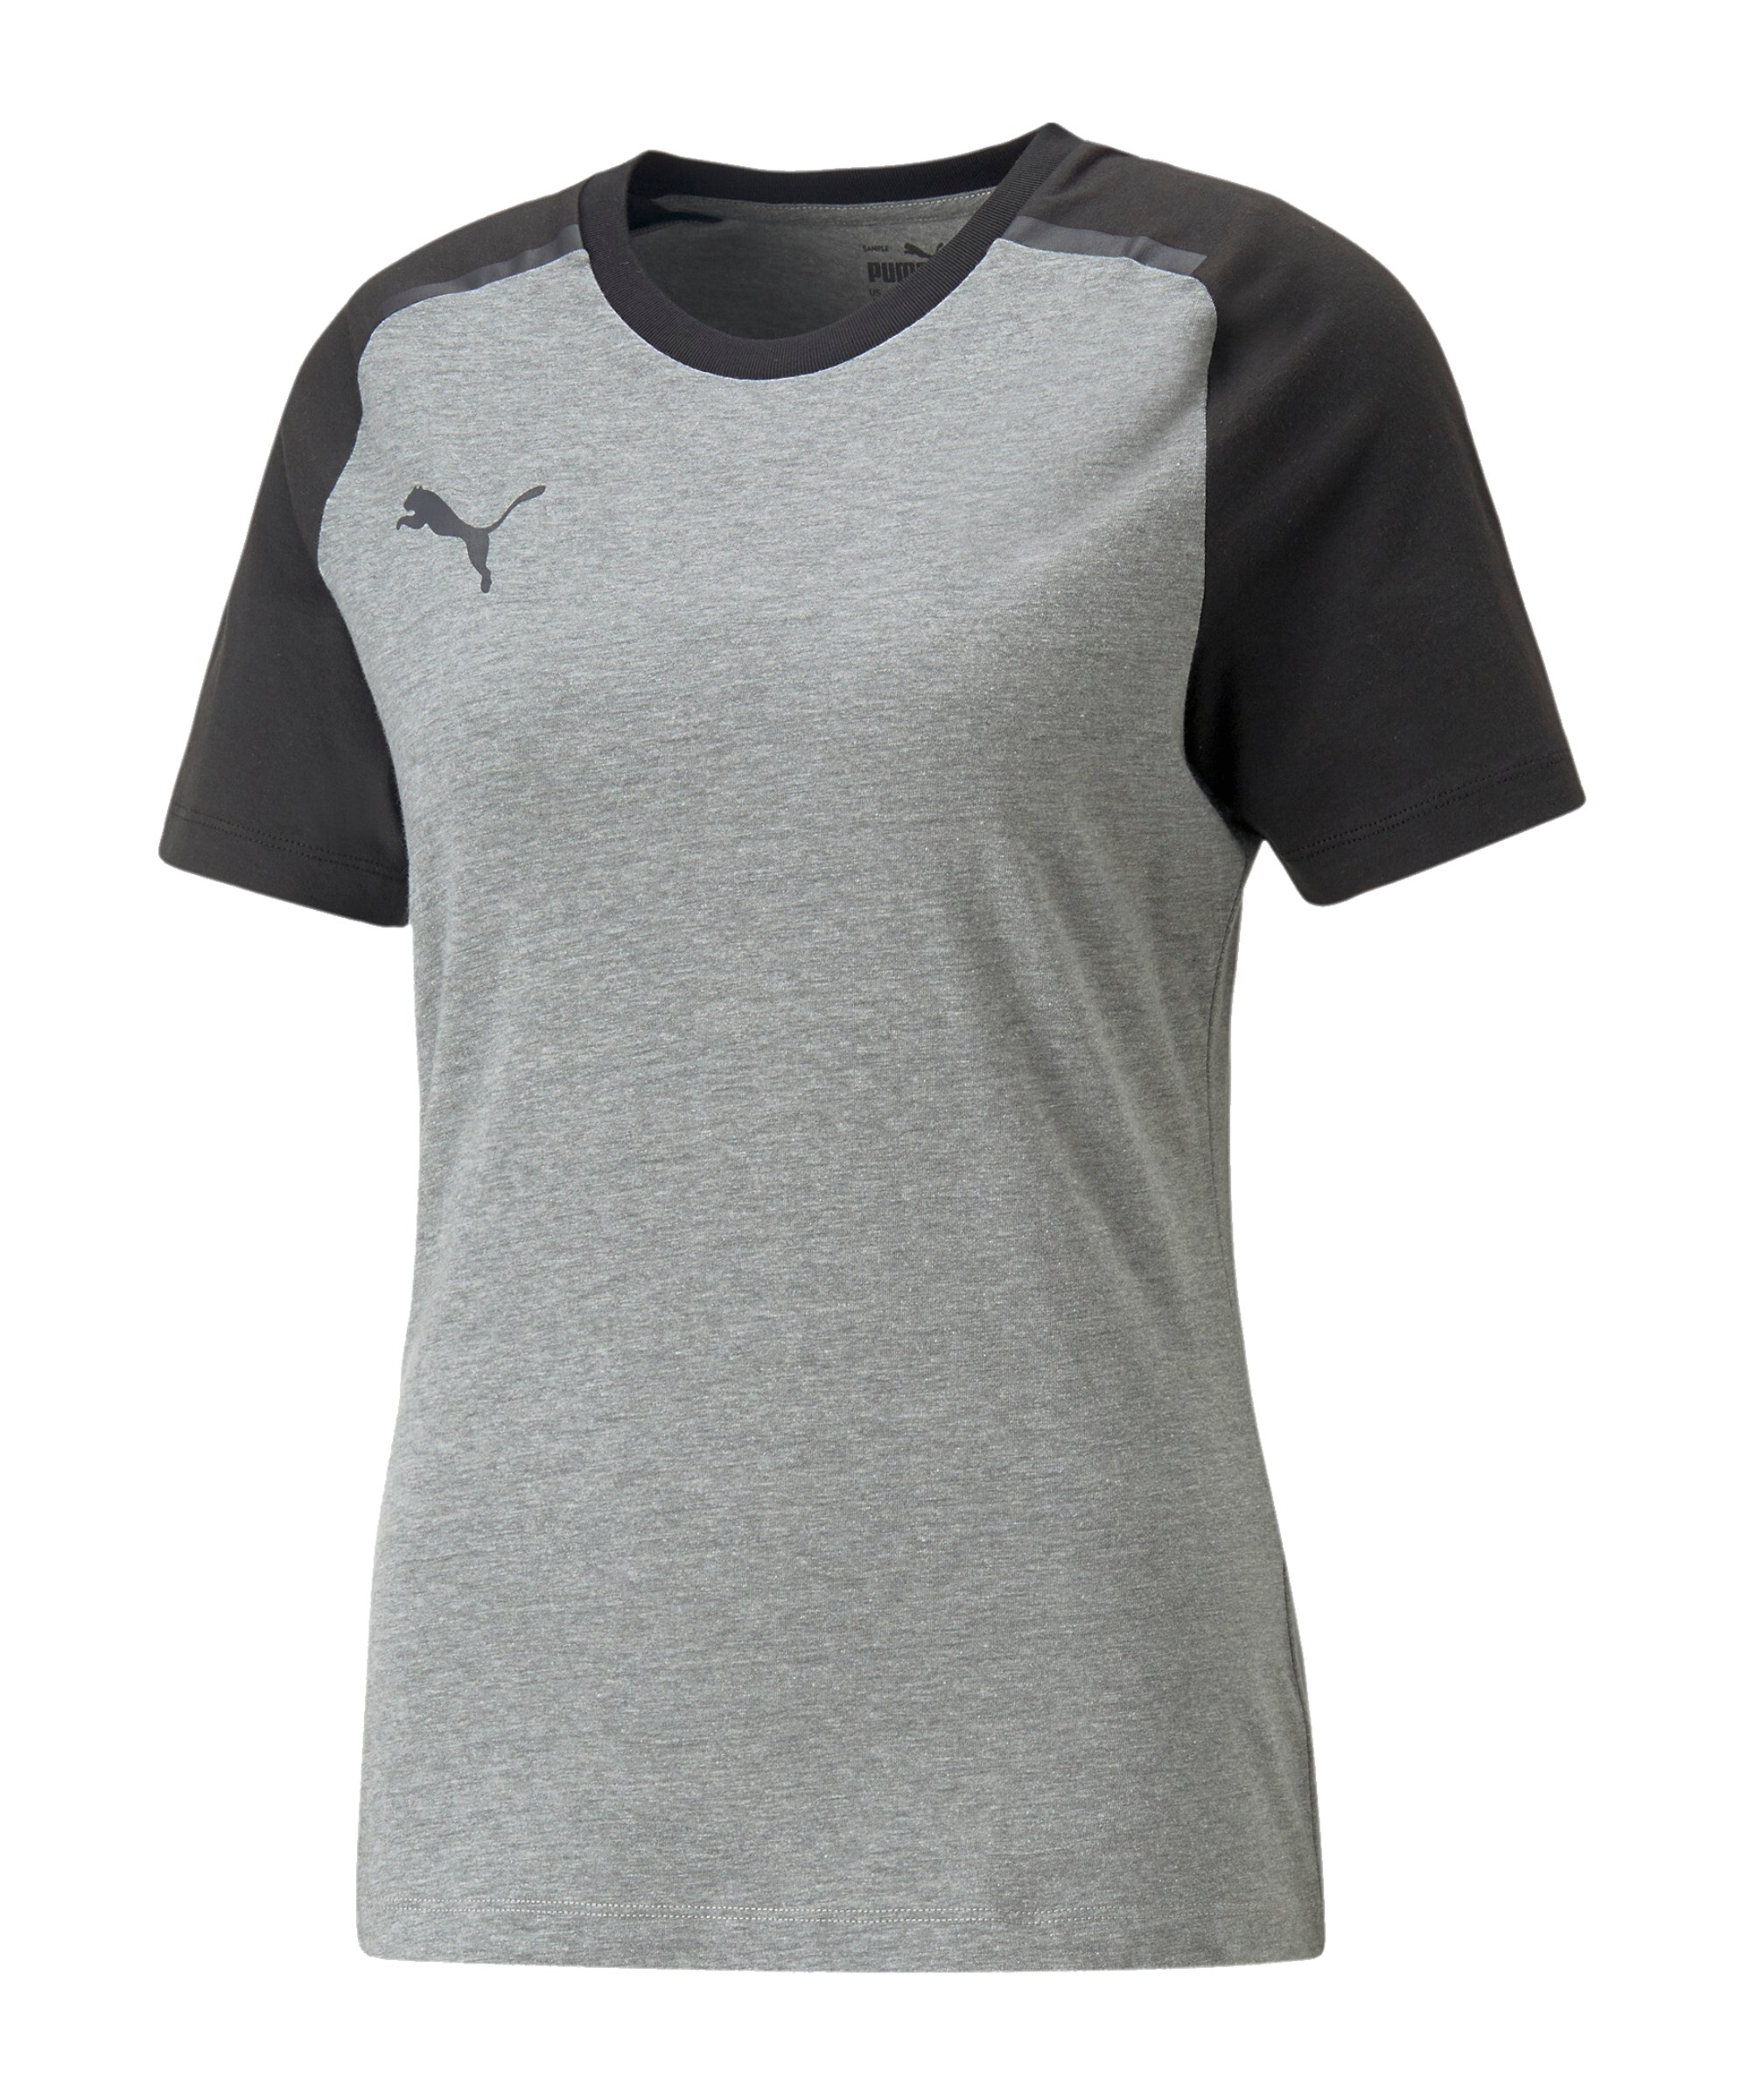 PUMA teamCUP Casuals T-Shirt Damen F013 Grau grau